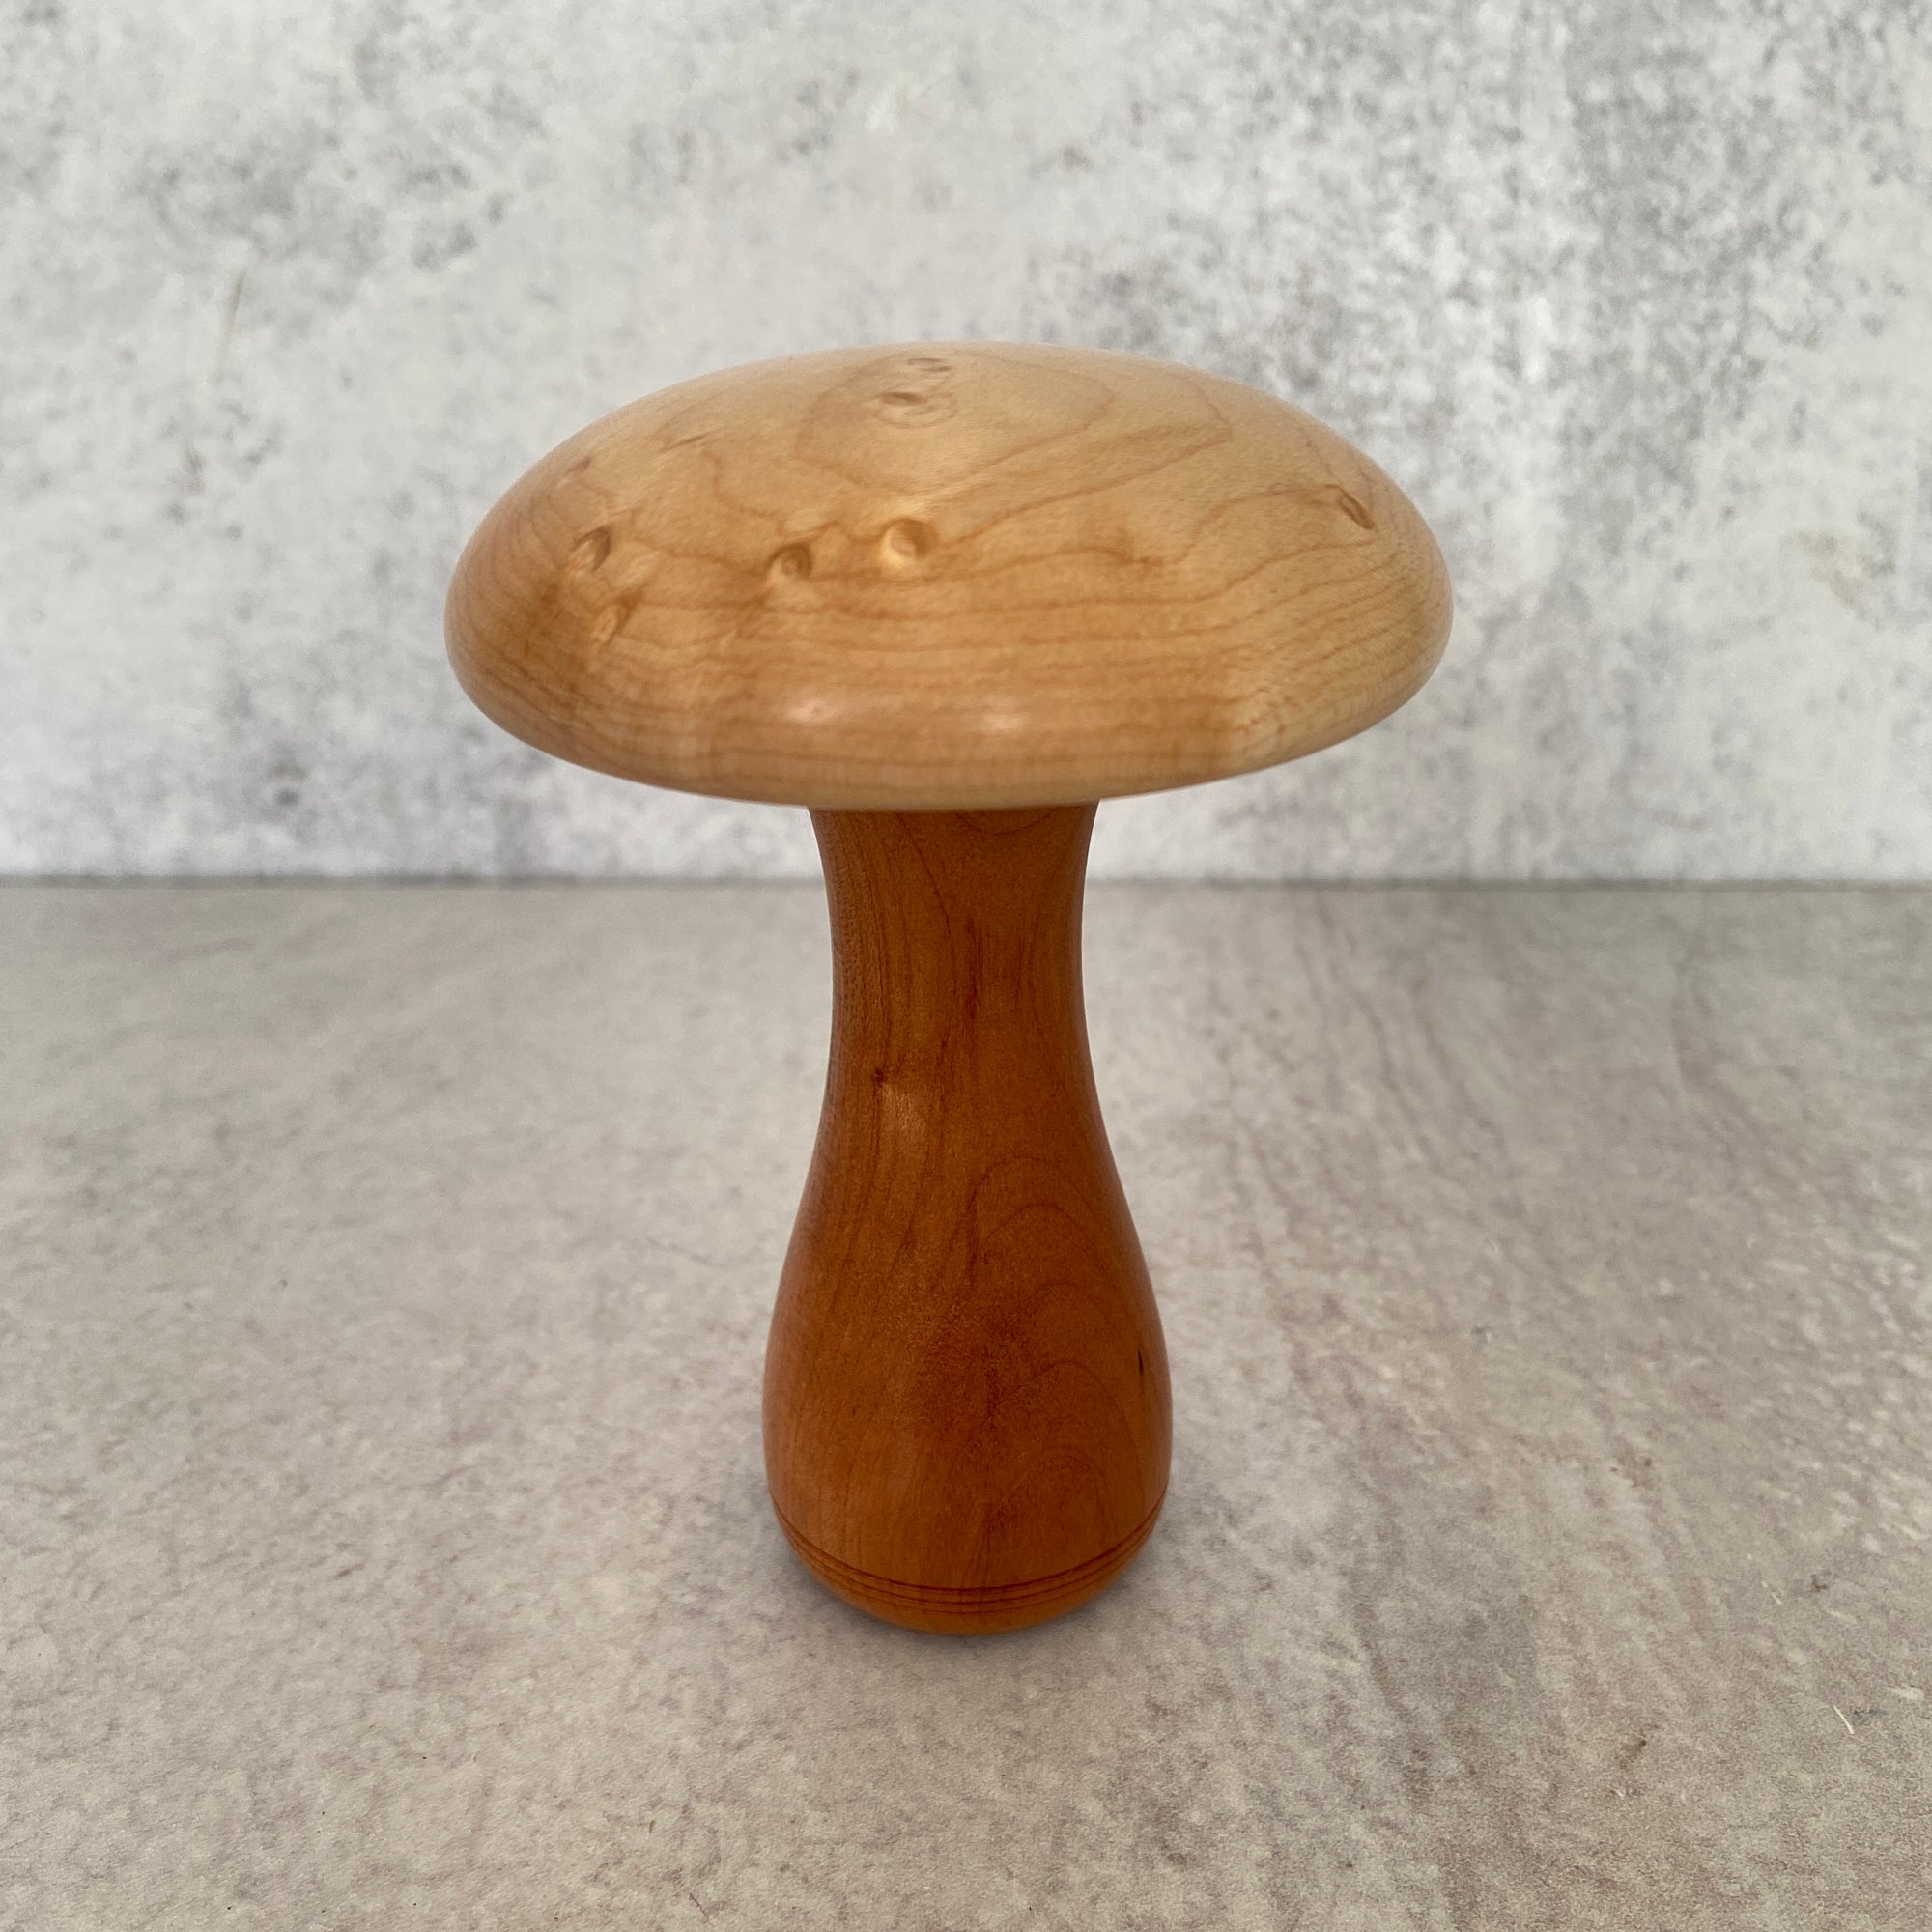  Darning Mushroom with Stretch Holder,Cute Wooden